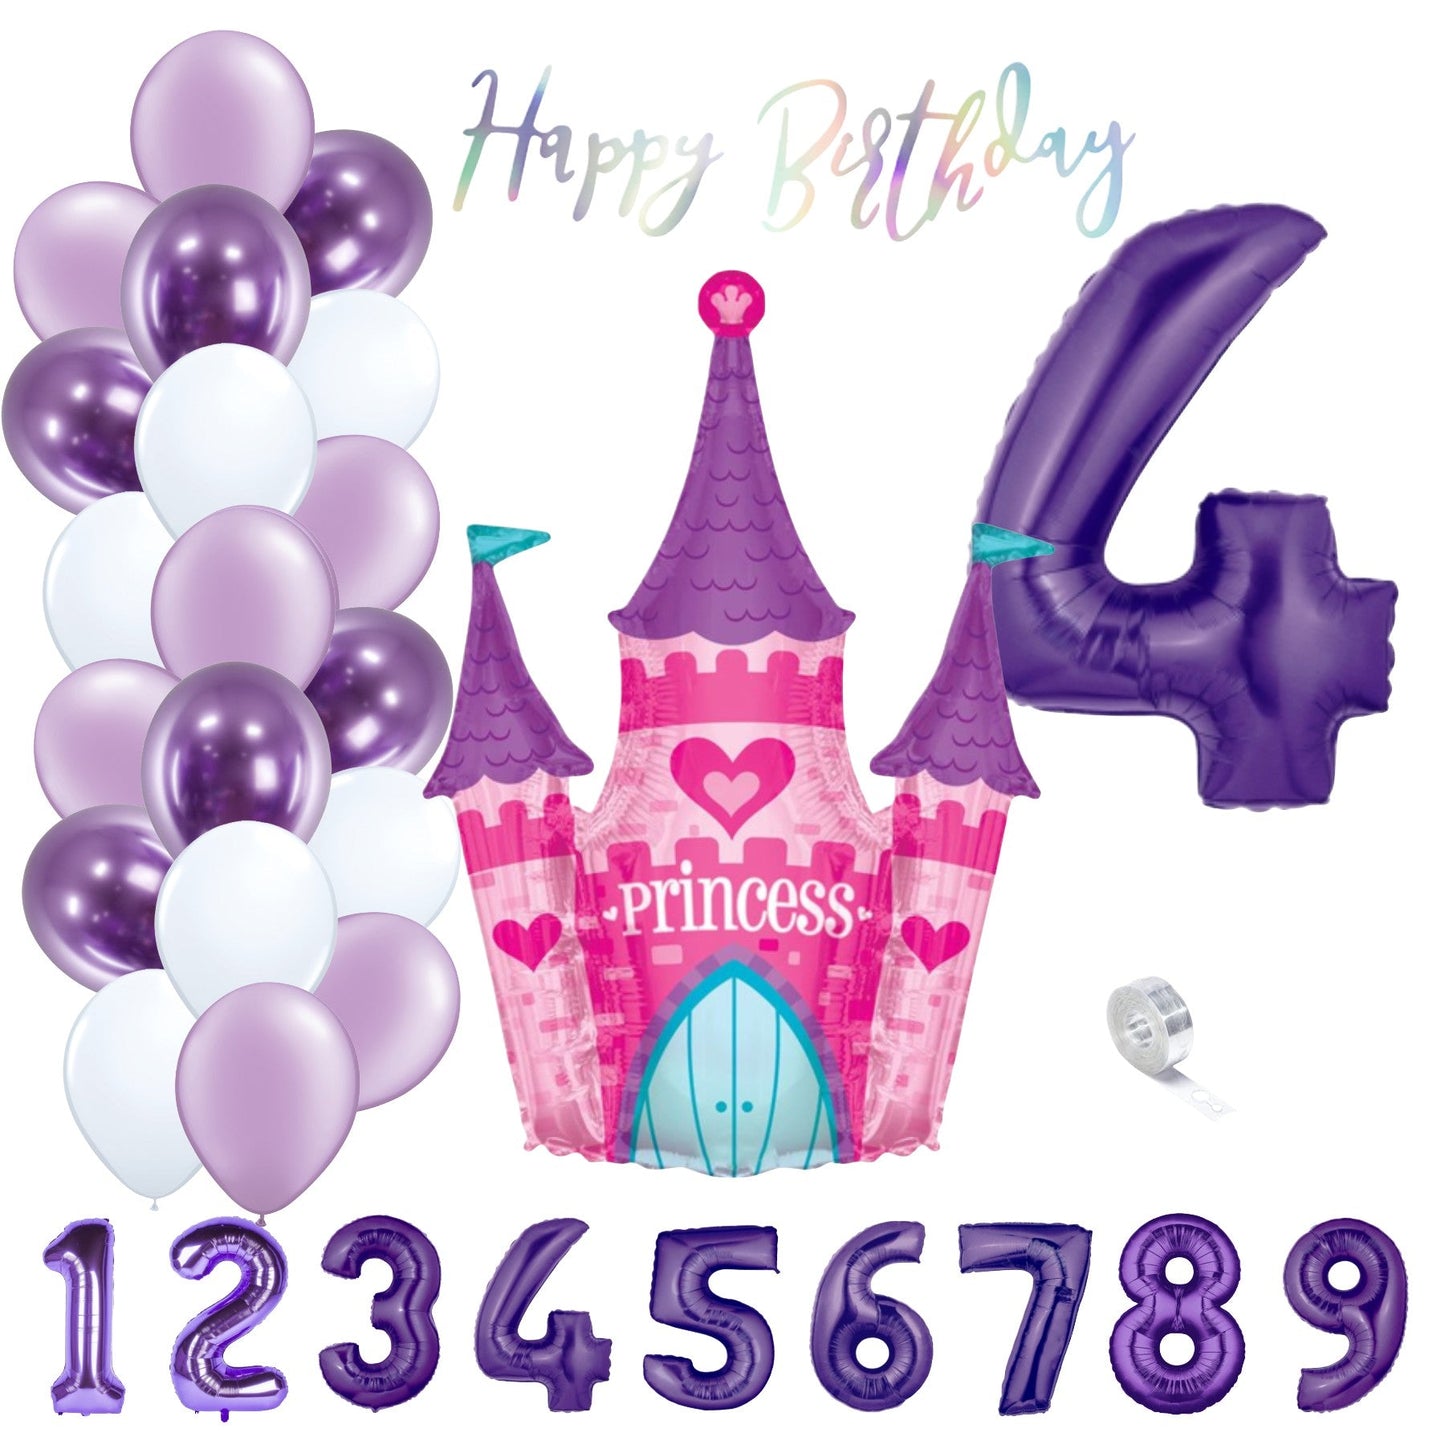 Partykarton "Prinzessin Violett" 29 Teile - Party im Karton